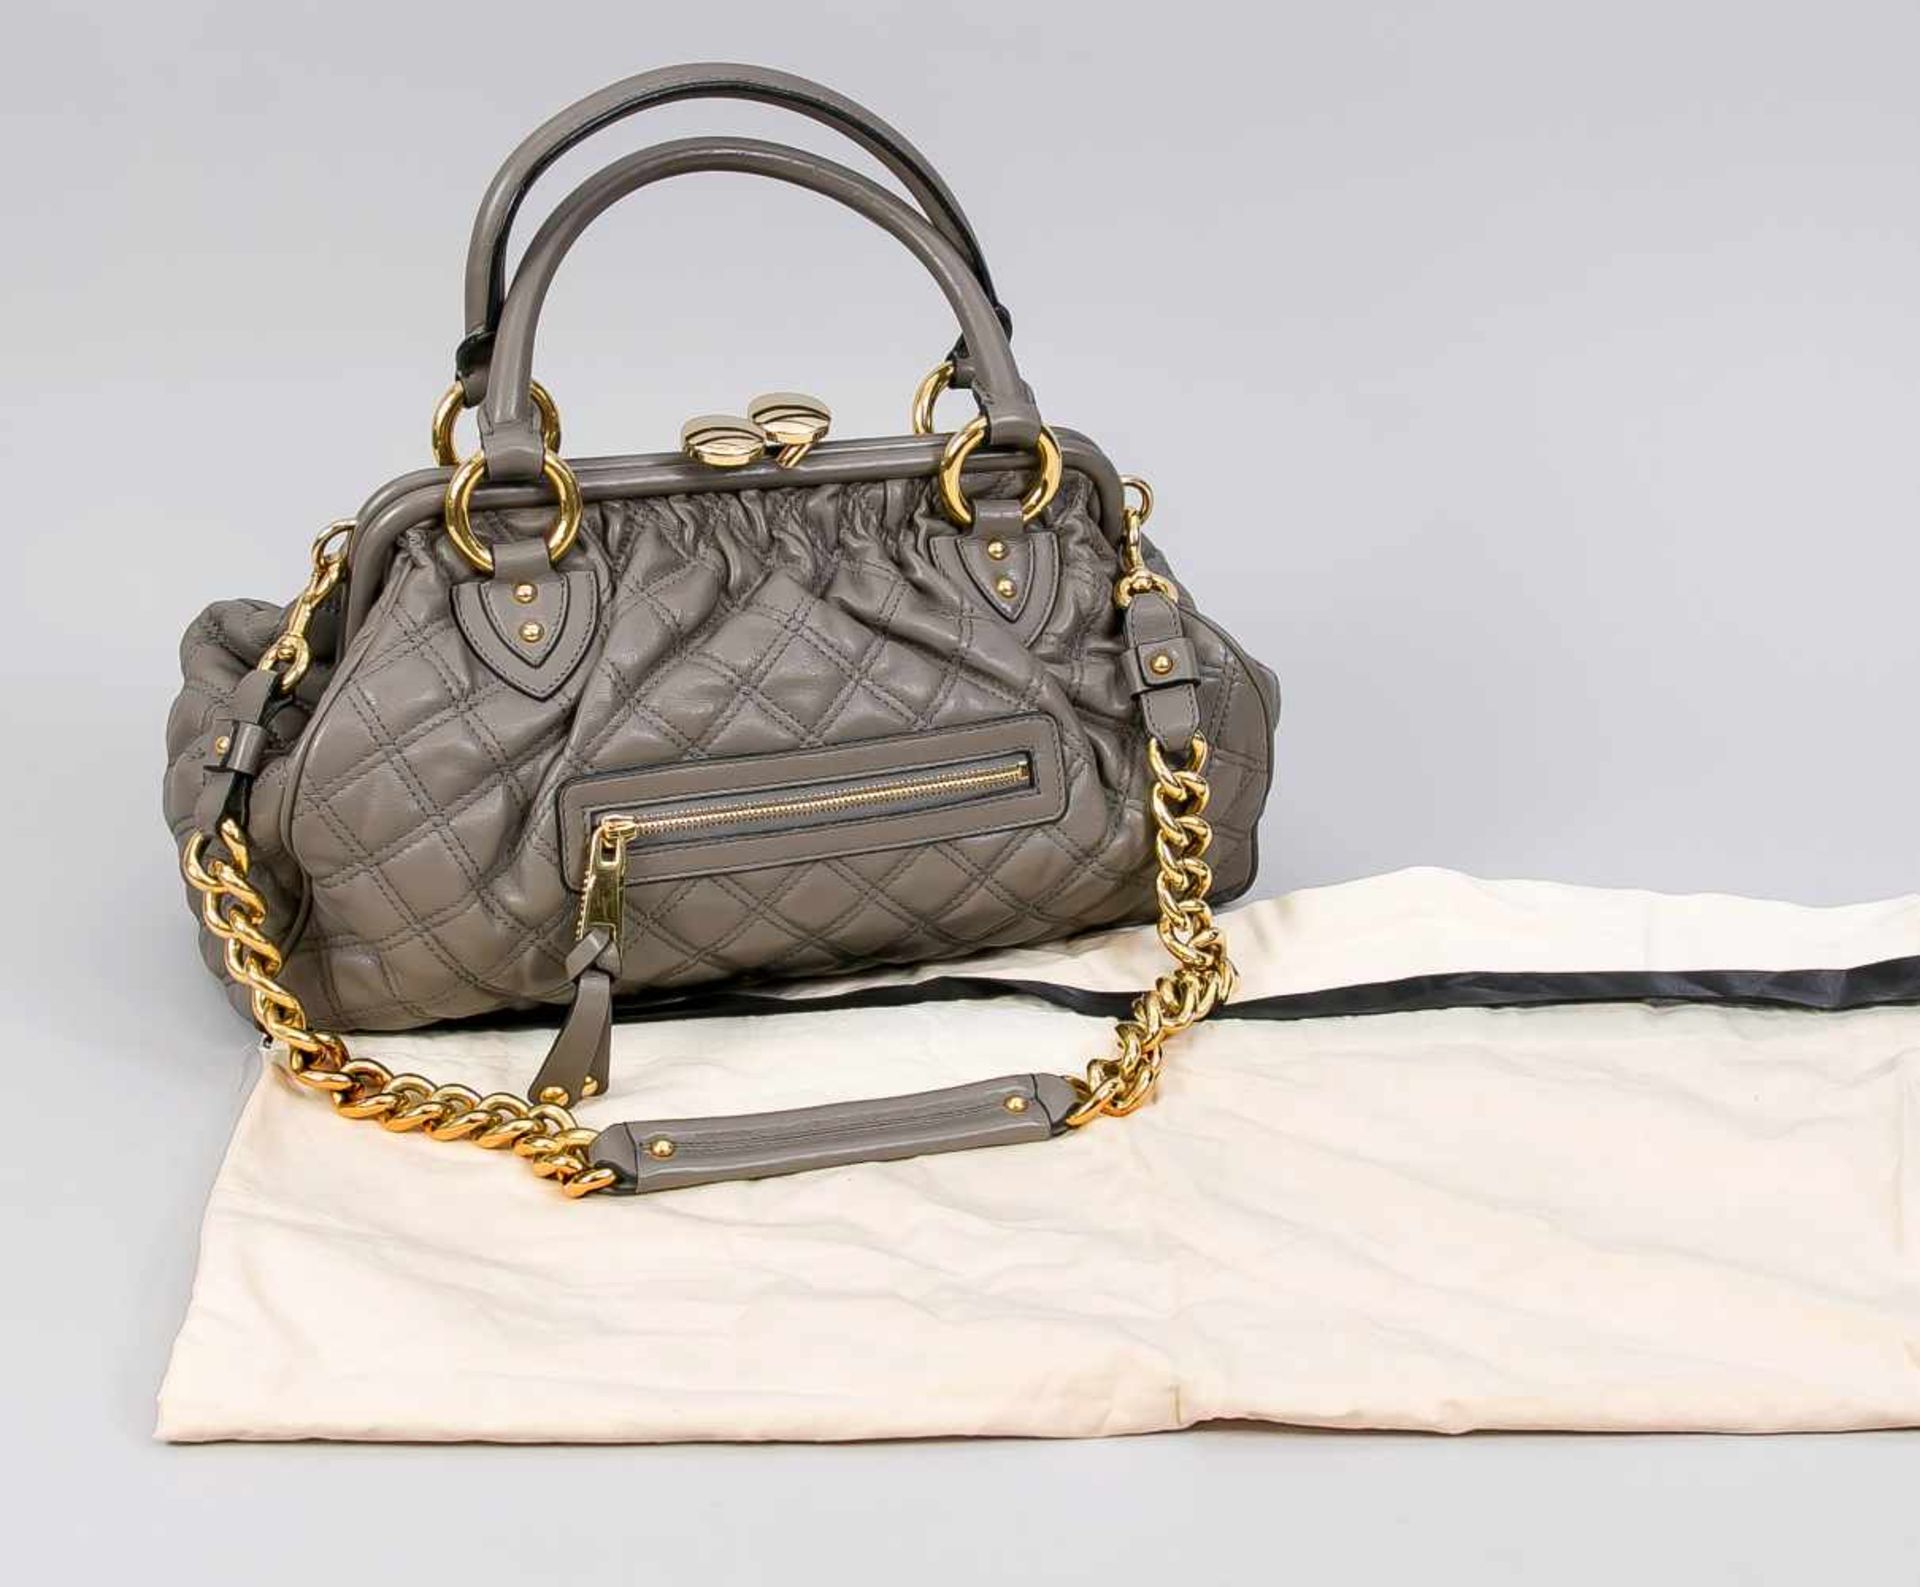 Marc Jacobs Handtasche, 2. H. 20. Jh., graues Leder, gesteppt und leicht gerafft. Großer